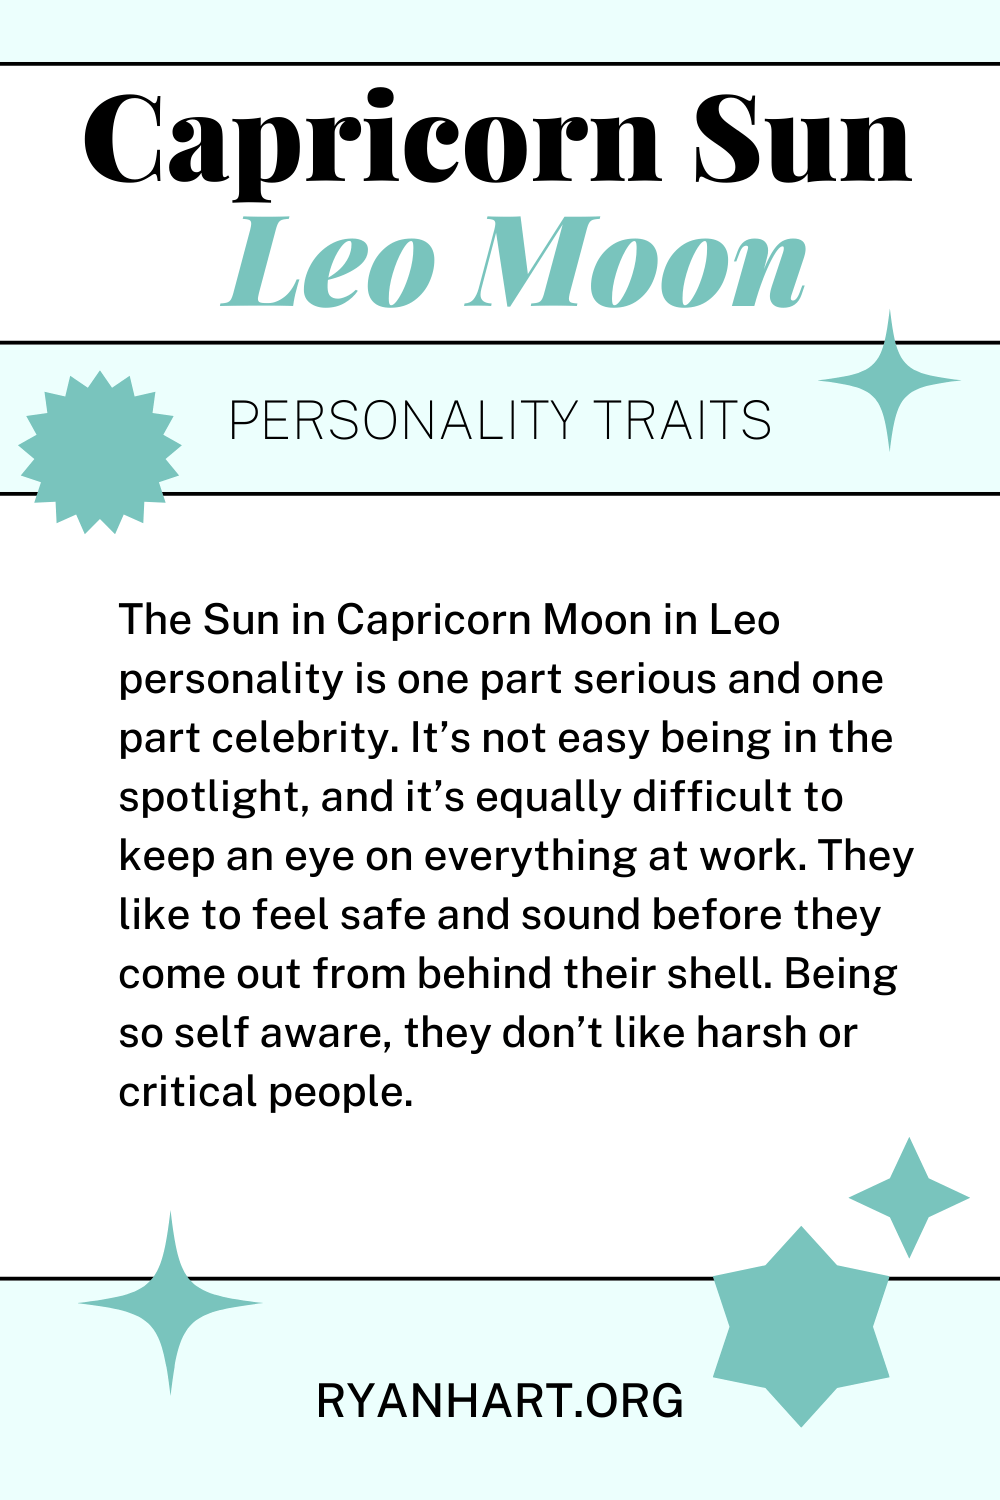  Ciri-ciri Personaliti Capricorn Sun Leo Moon